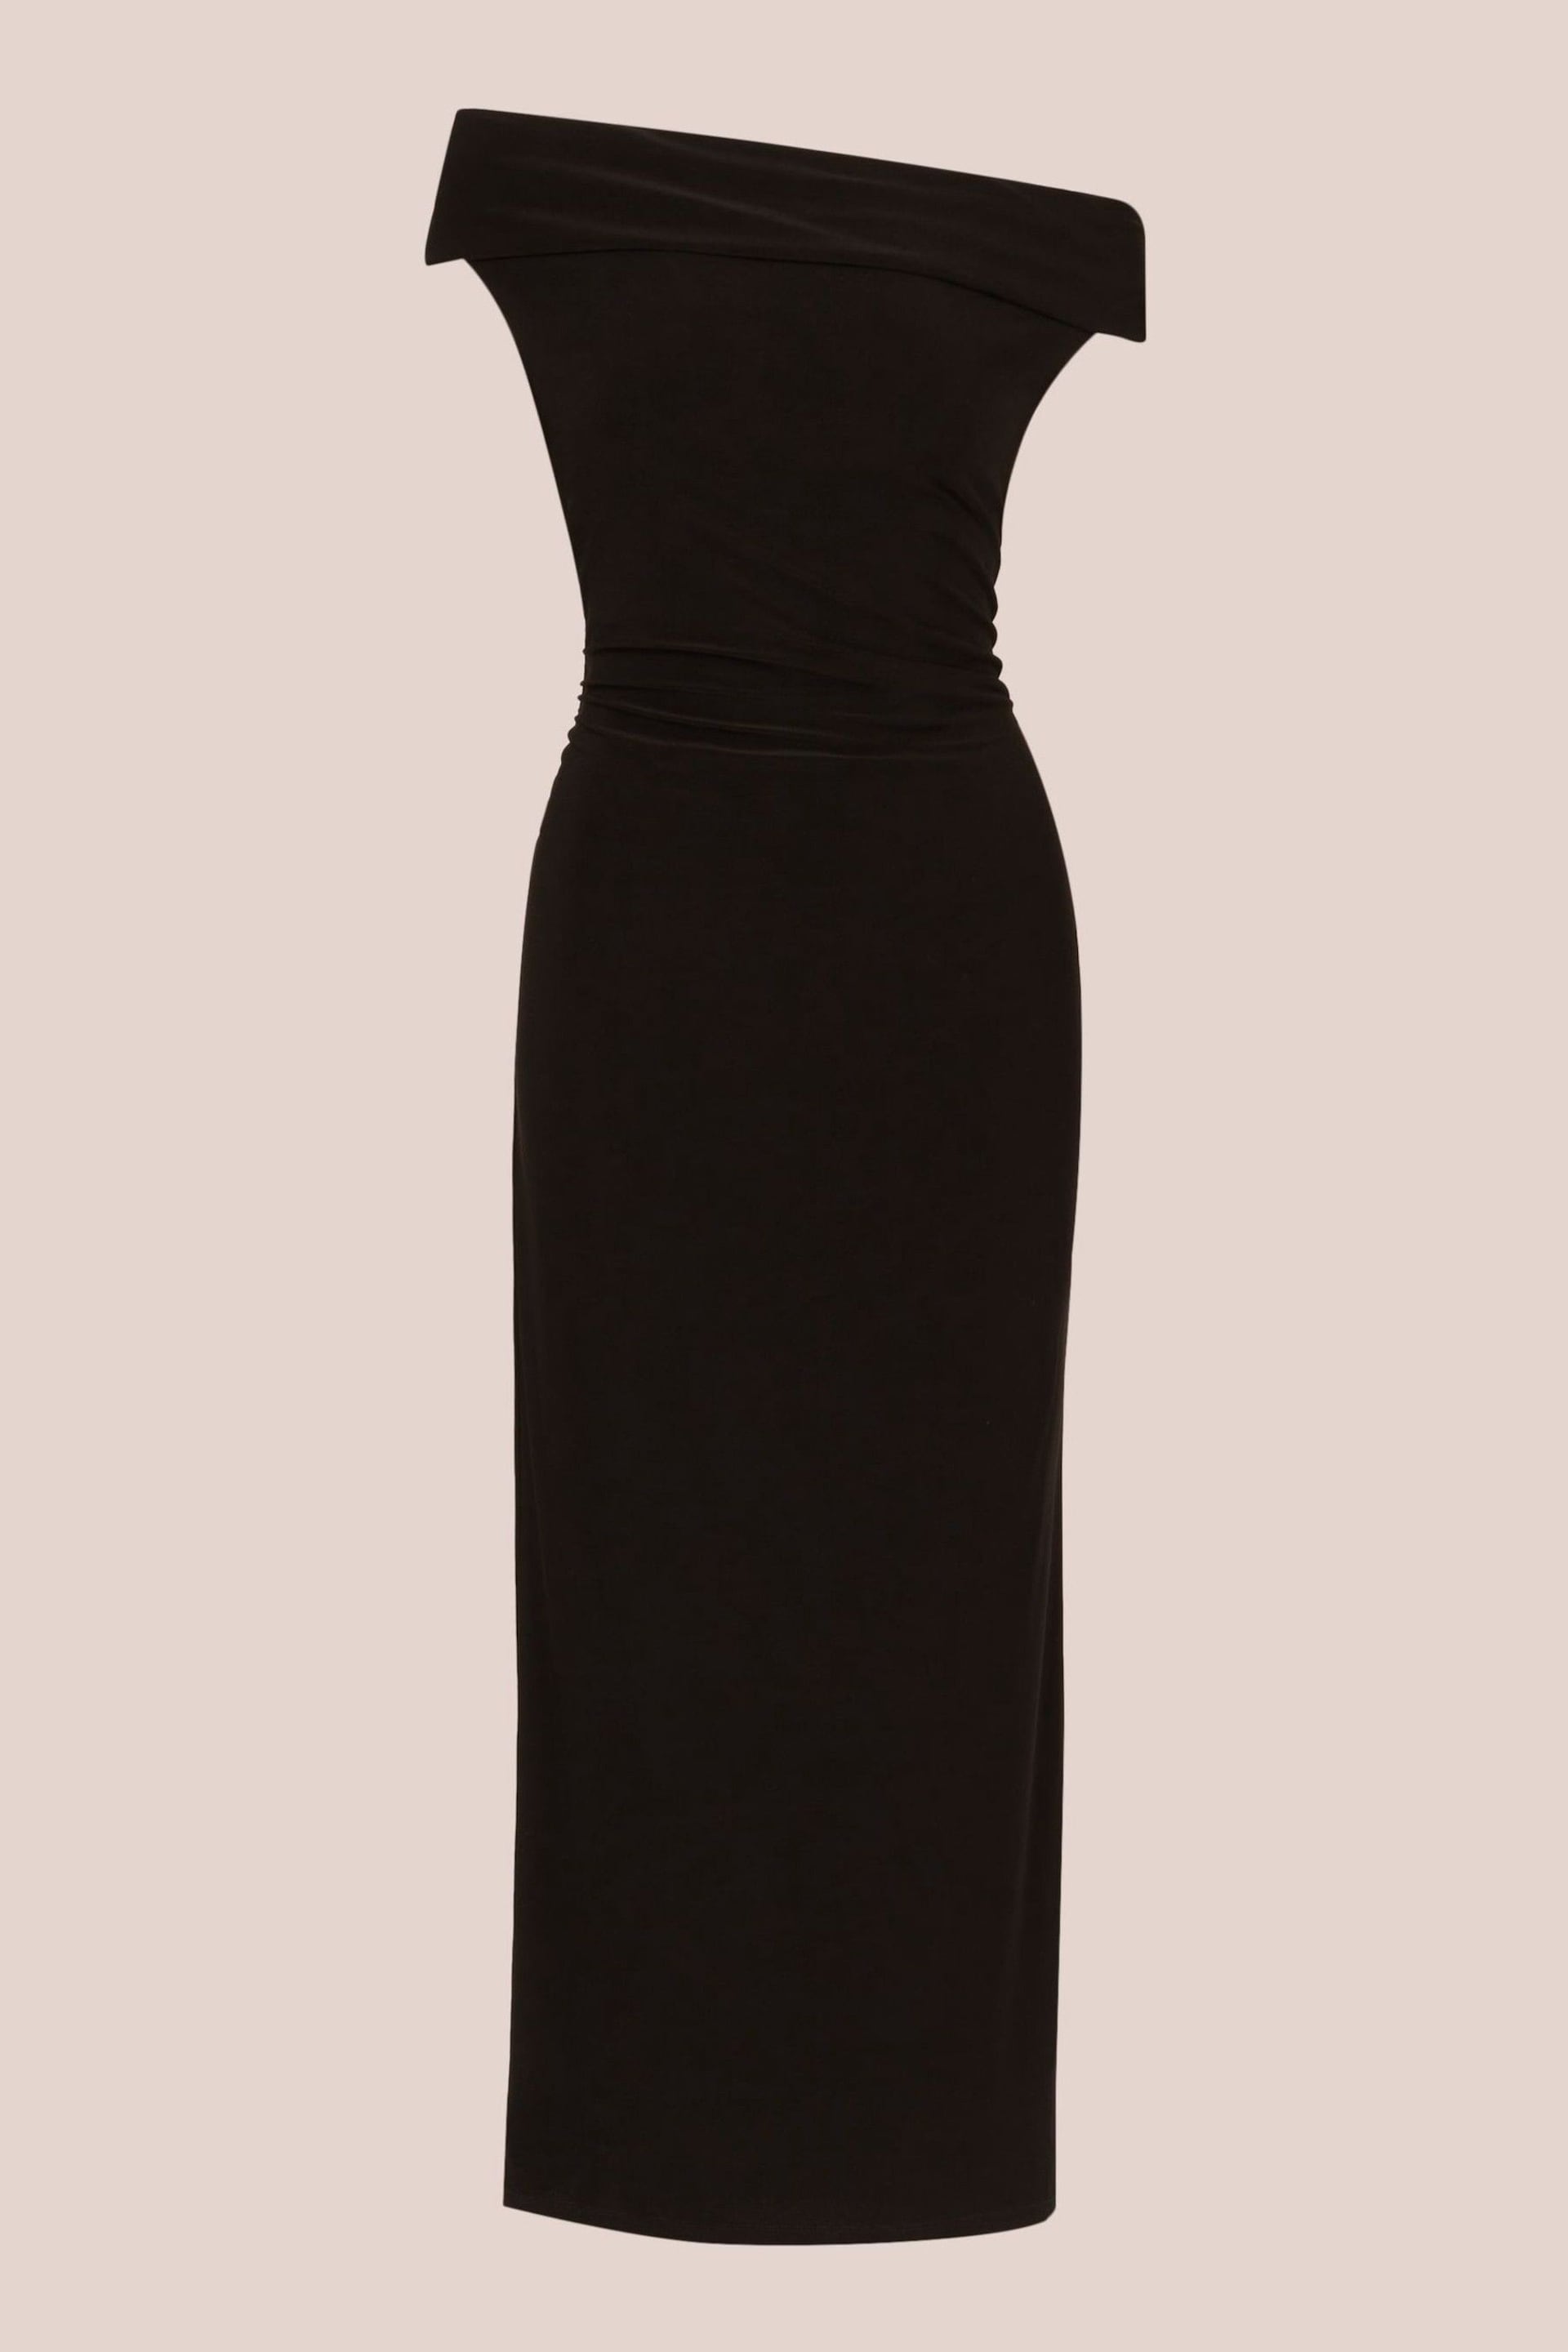 Adrianna Papell Matte Jersey Long Black Dress - Image 6 of 7